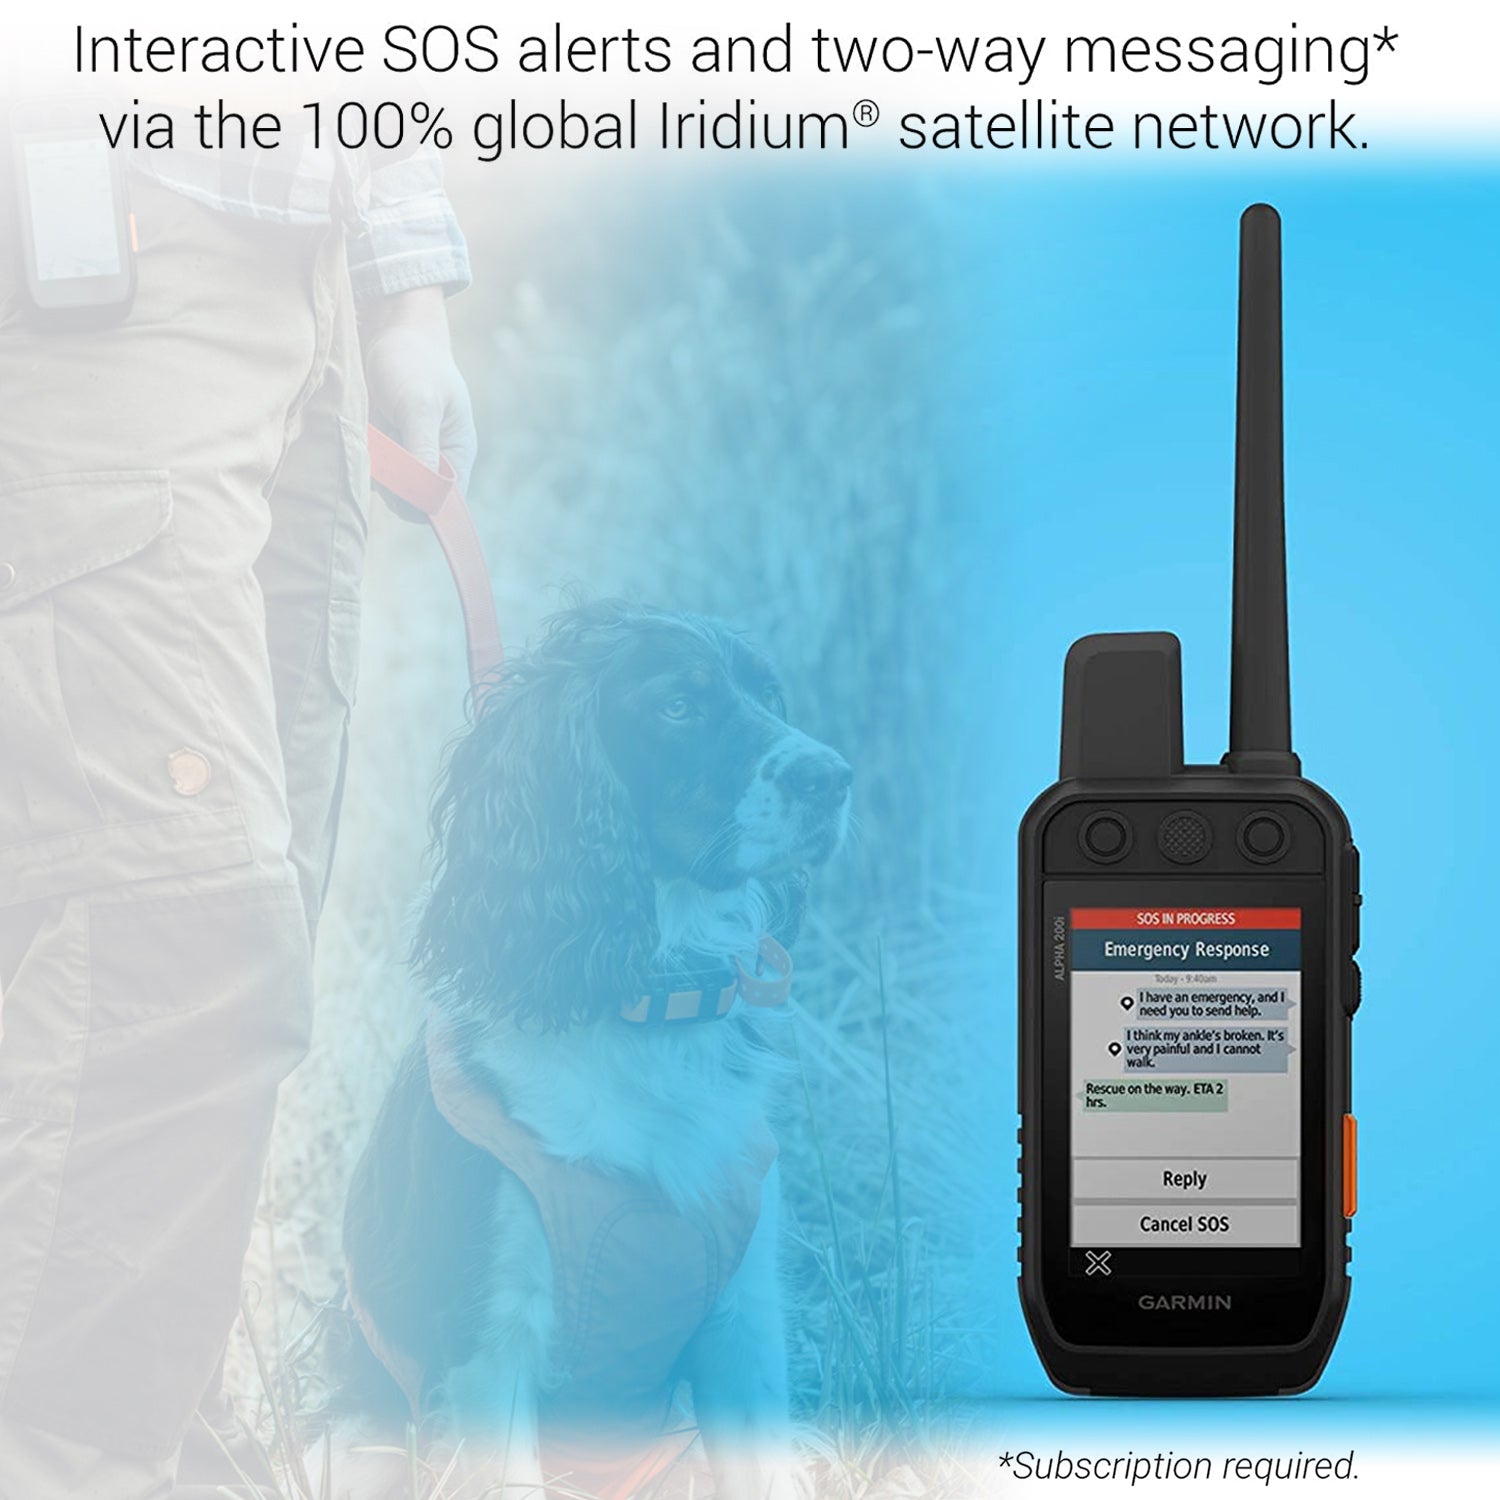 Garmin Alpha 200i Dog Tracking Handheld 010-02230-50 with USB Adapter + More